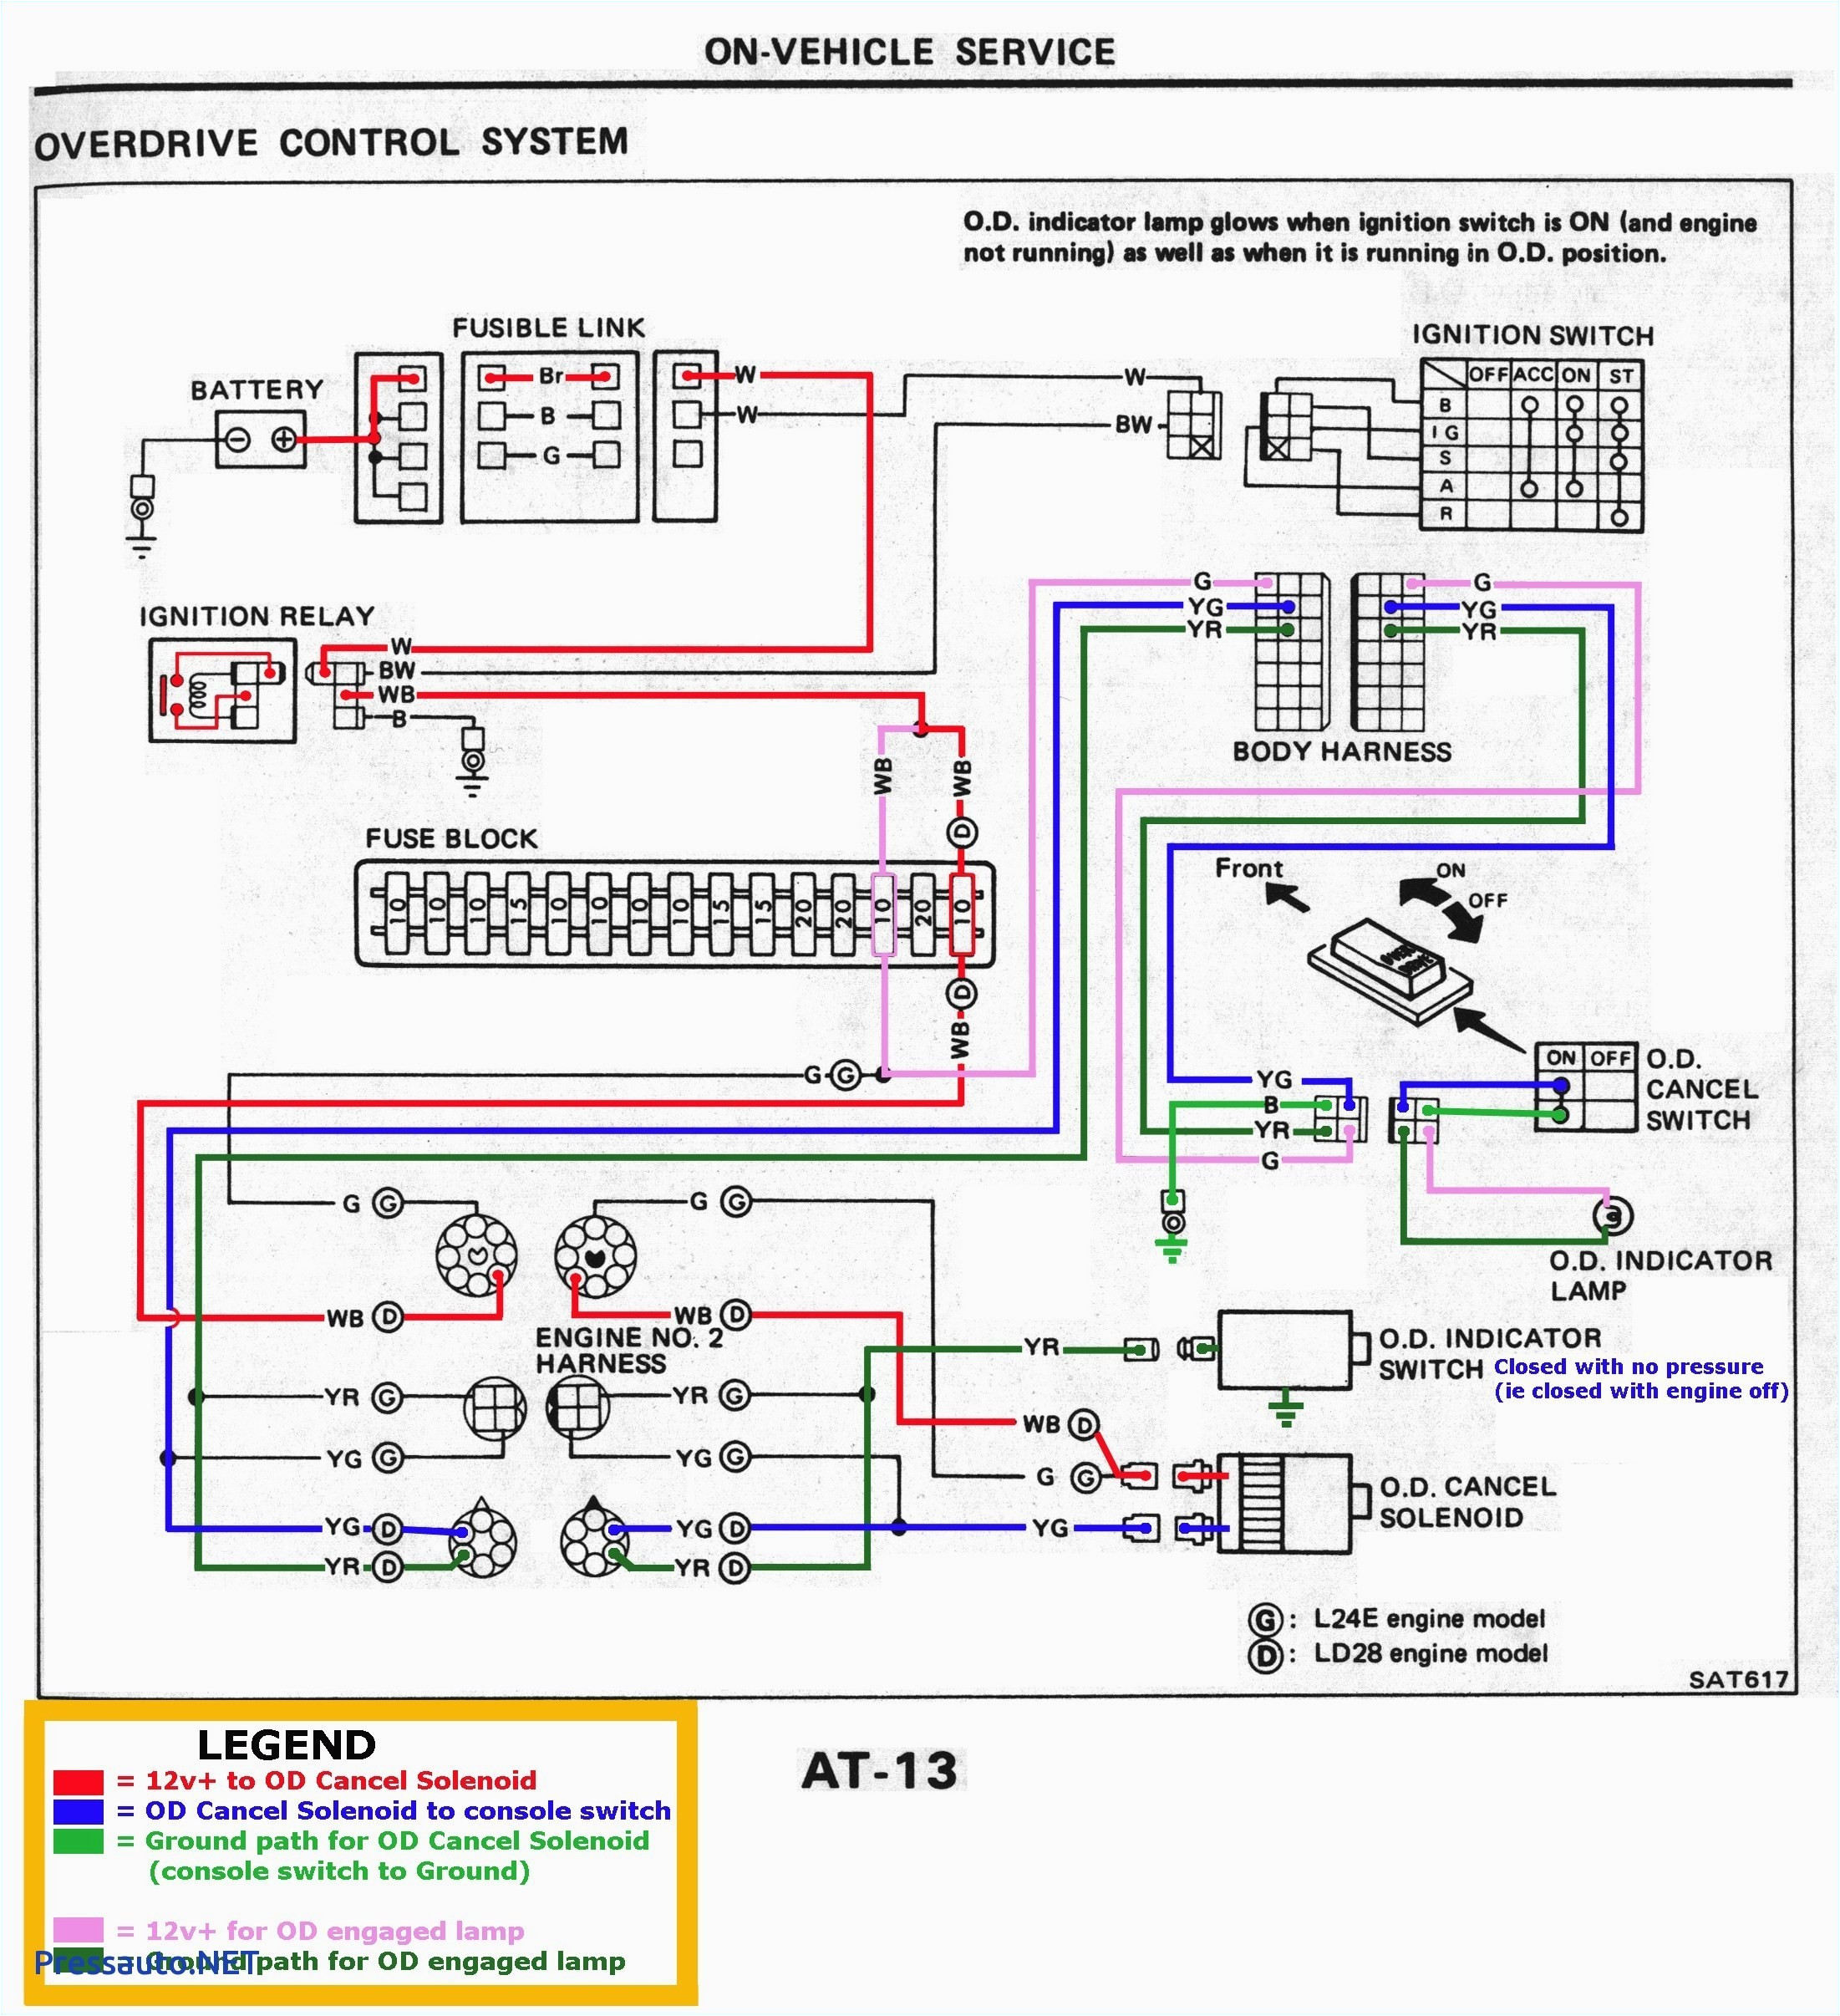 1997 subaru legacy wiring diagram inspirational subaru wiring diagram color codes example wiring diagram color of 1997 subaru legacy wiring diagram jpg